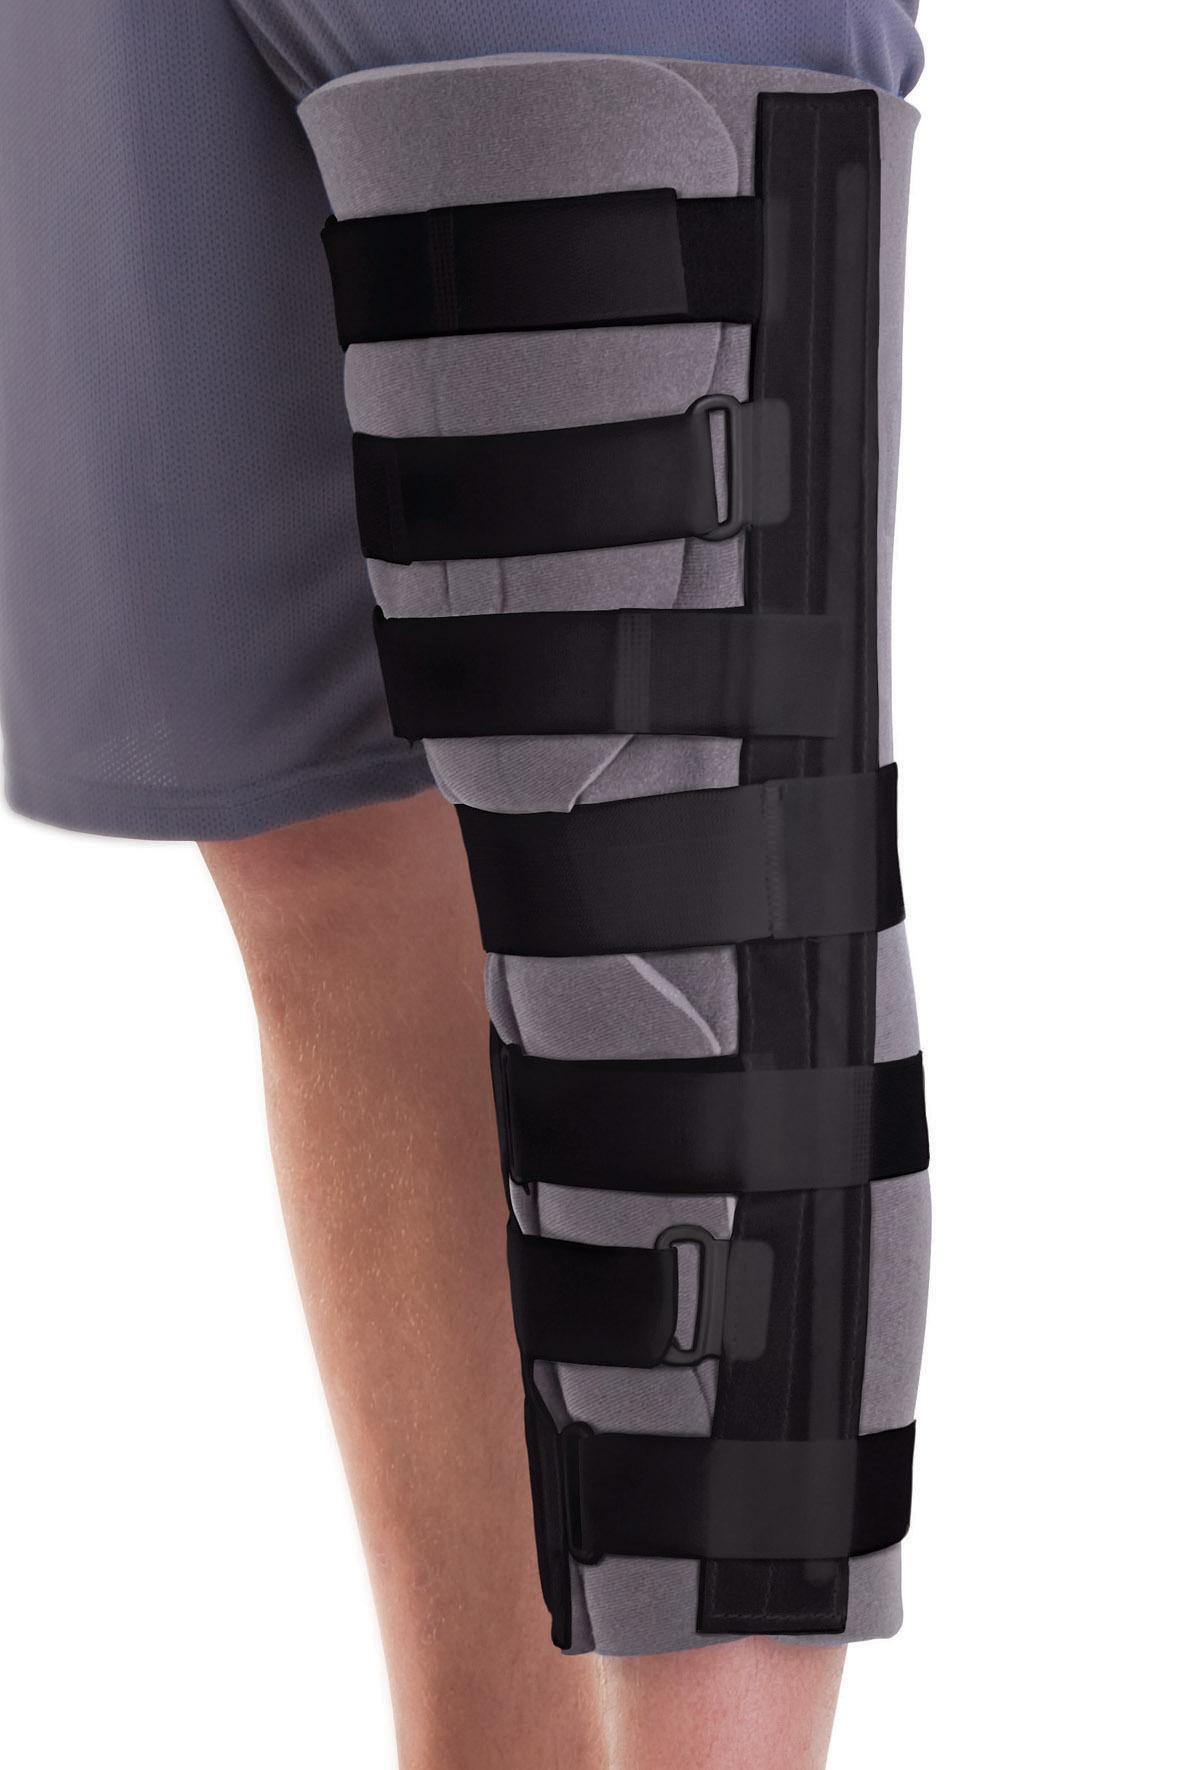 Cut-Away Knee Immobilizer,Universal